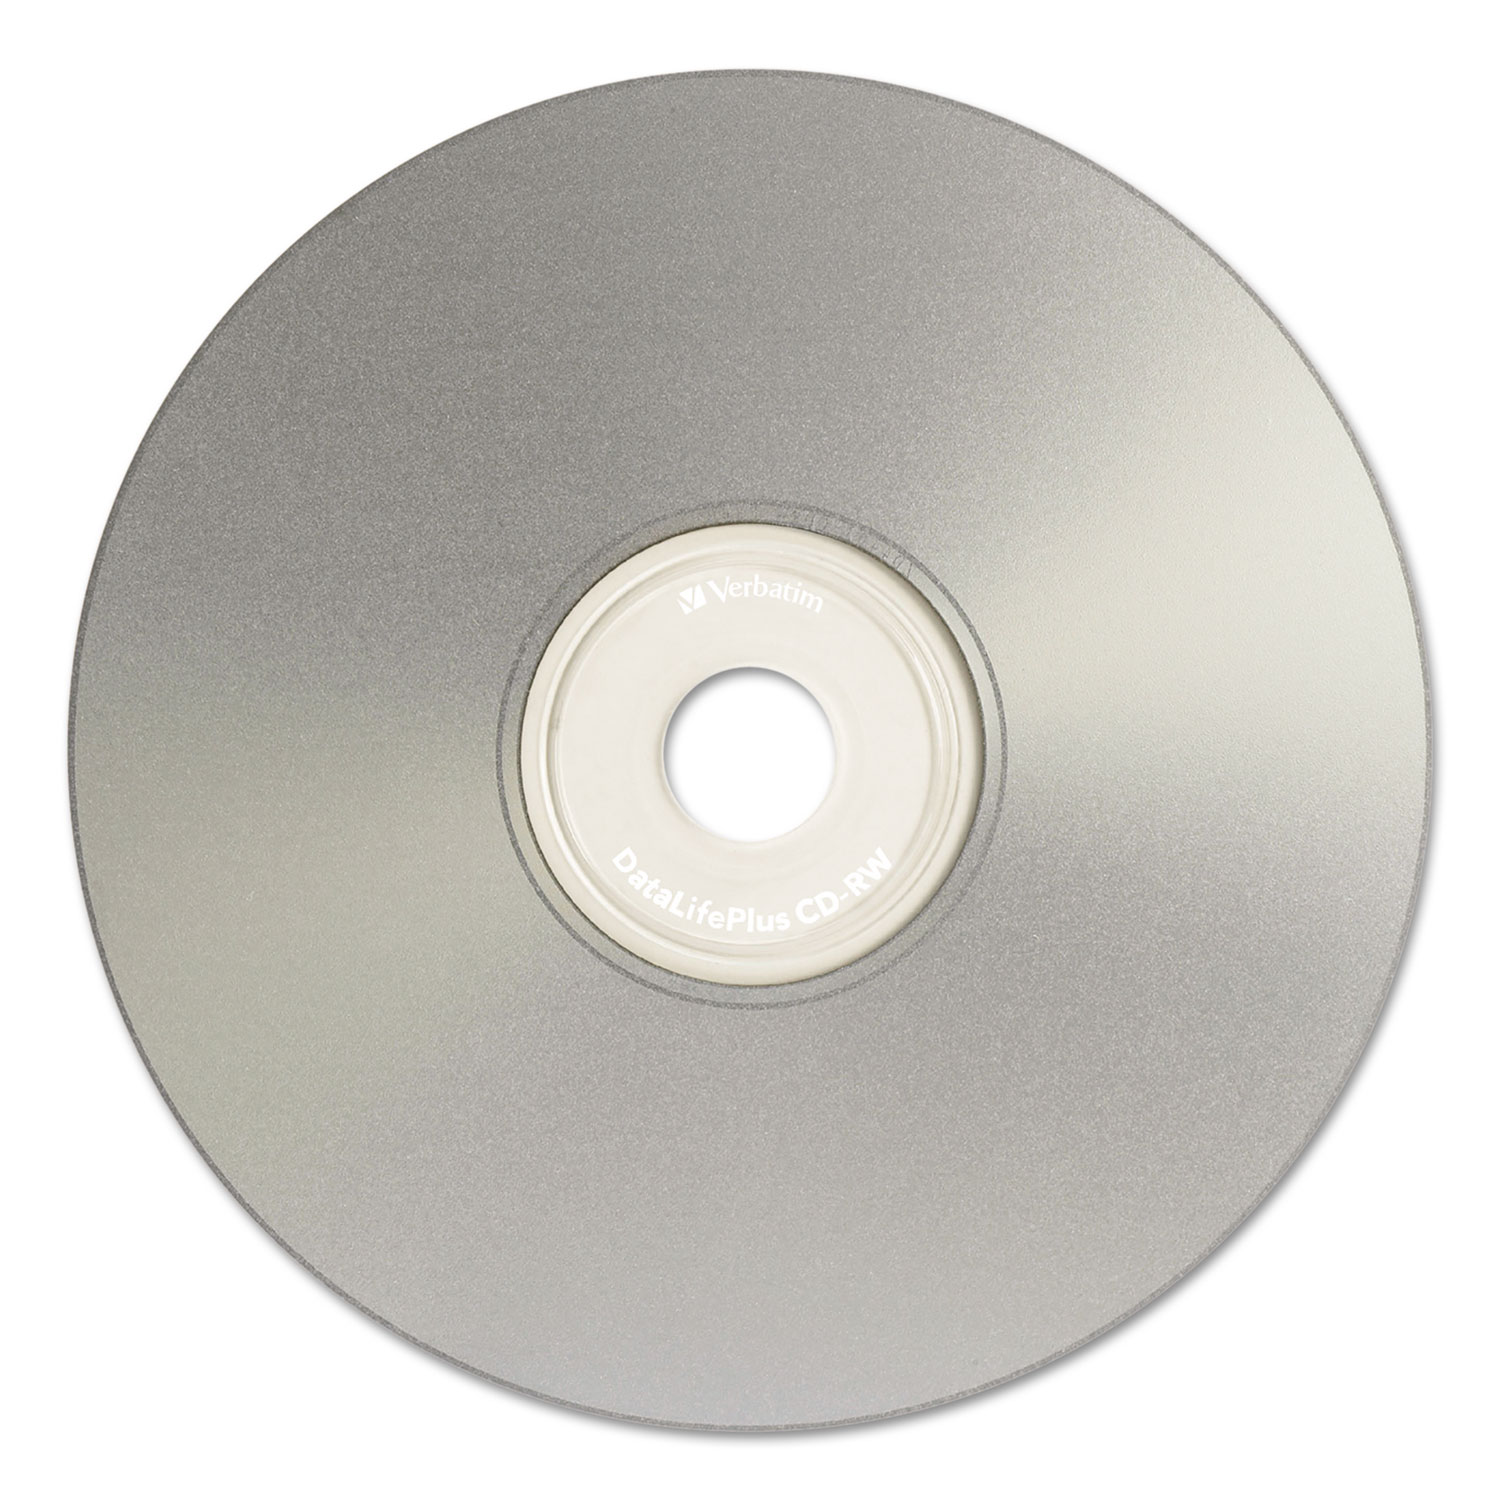 Verbatim DataLifePlus 700MB 2X - 4X CD-RW 50 Packs Spindle Media Model 95159 - image 2 of 4